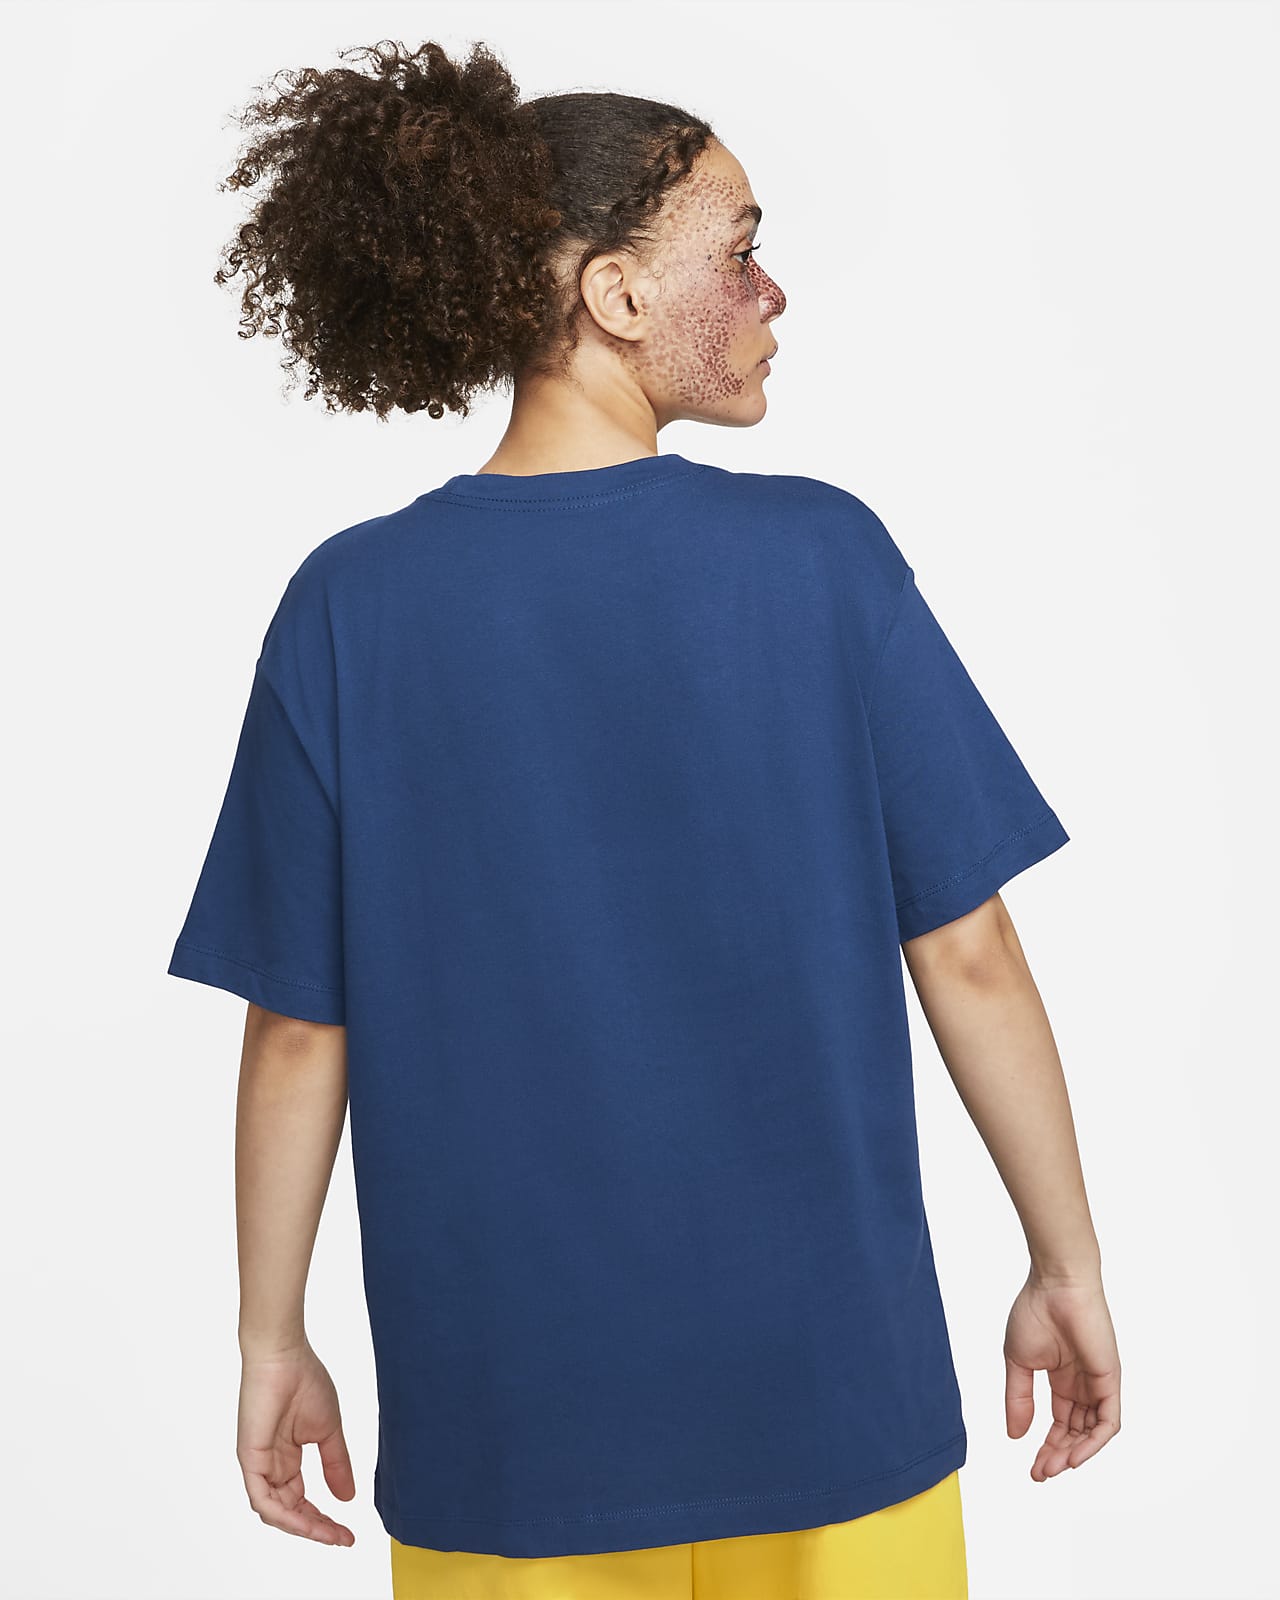 Nike Women's Dri-Fit Swoosh Fly T-Shirt, Medium, Baltic Blue